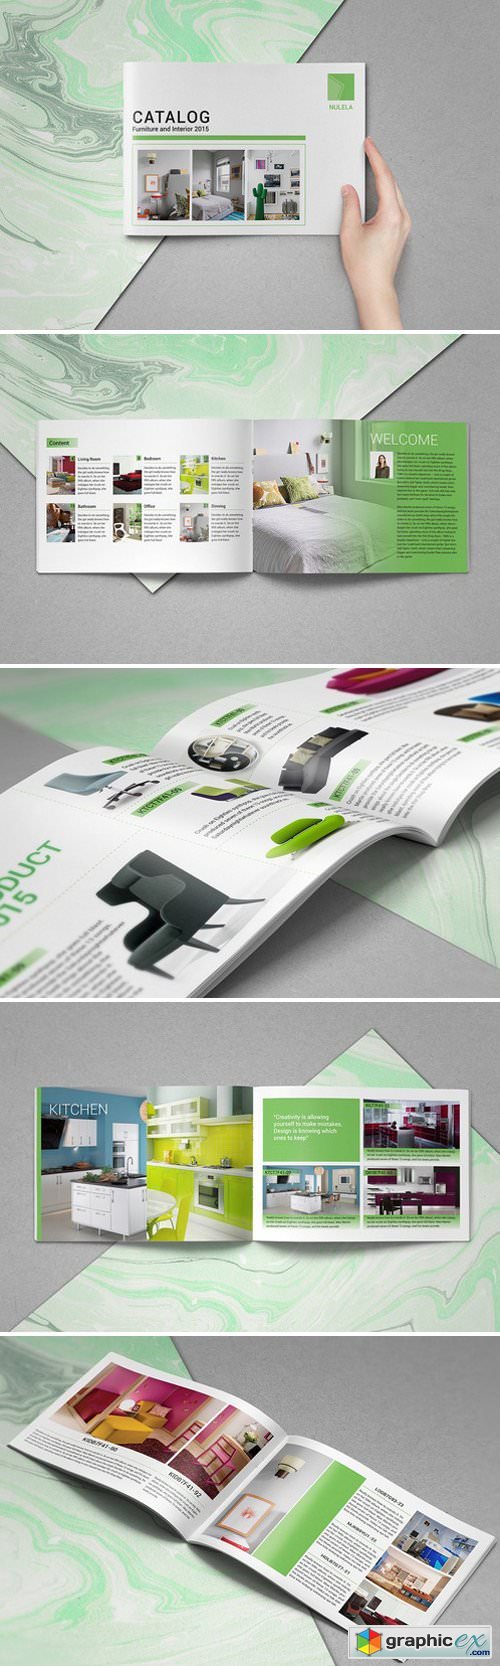 Interior Product Catalogs/Brochure